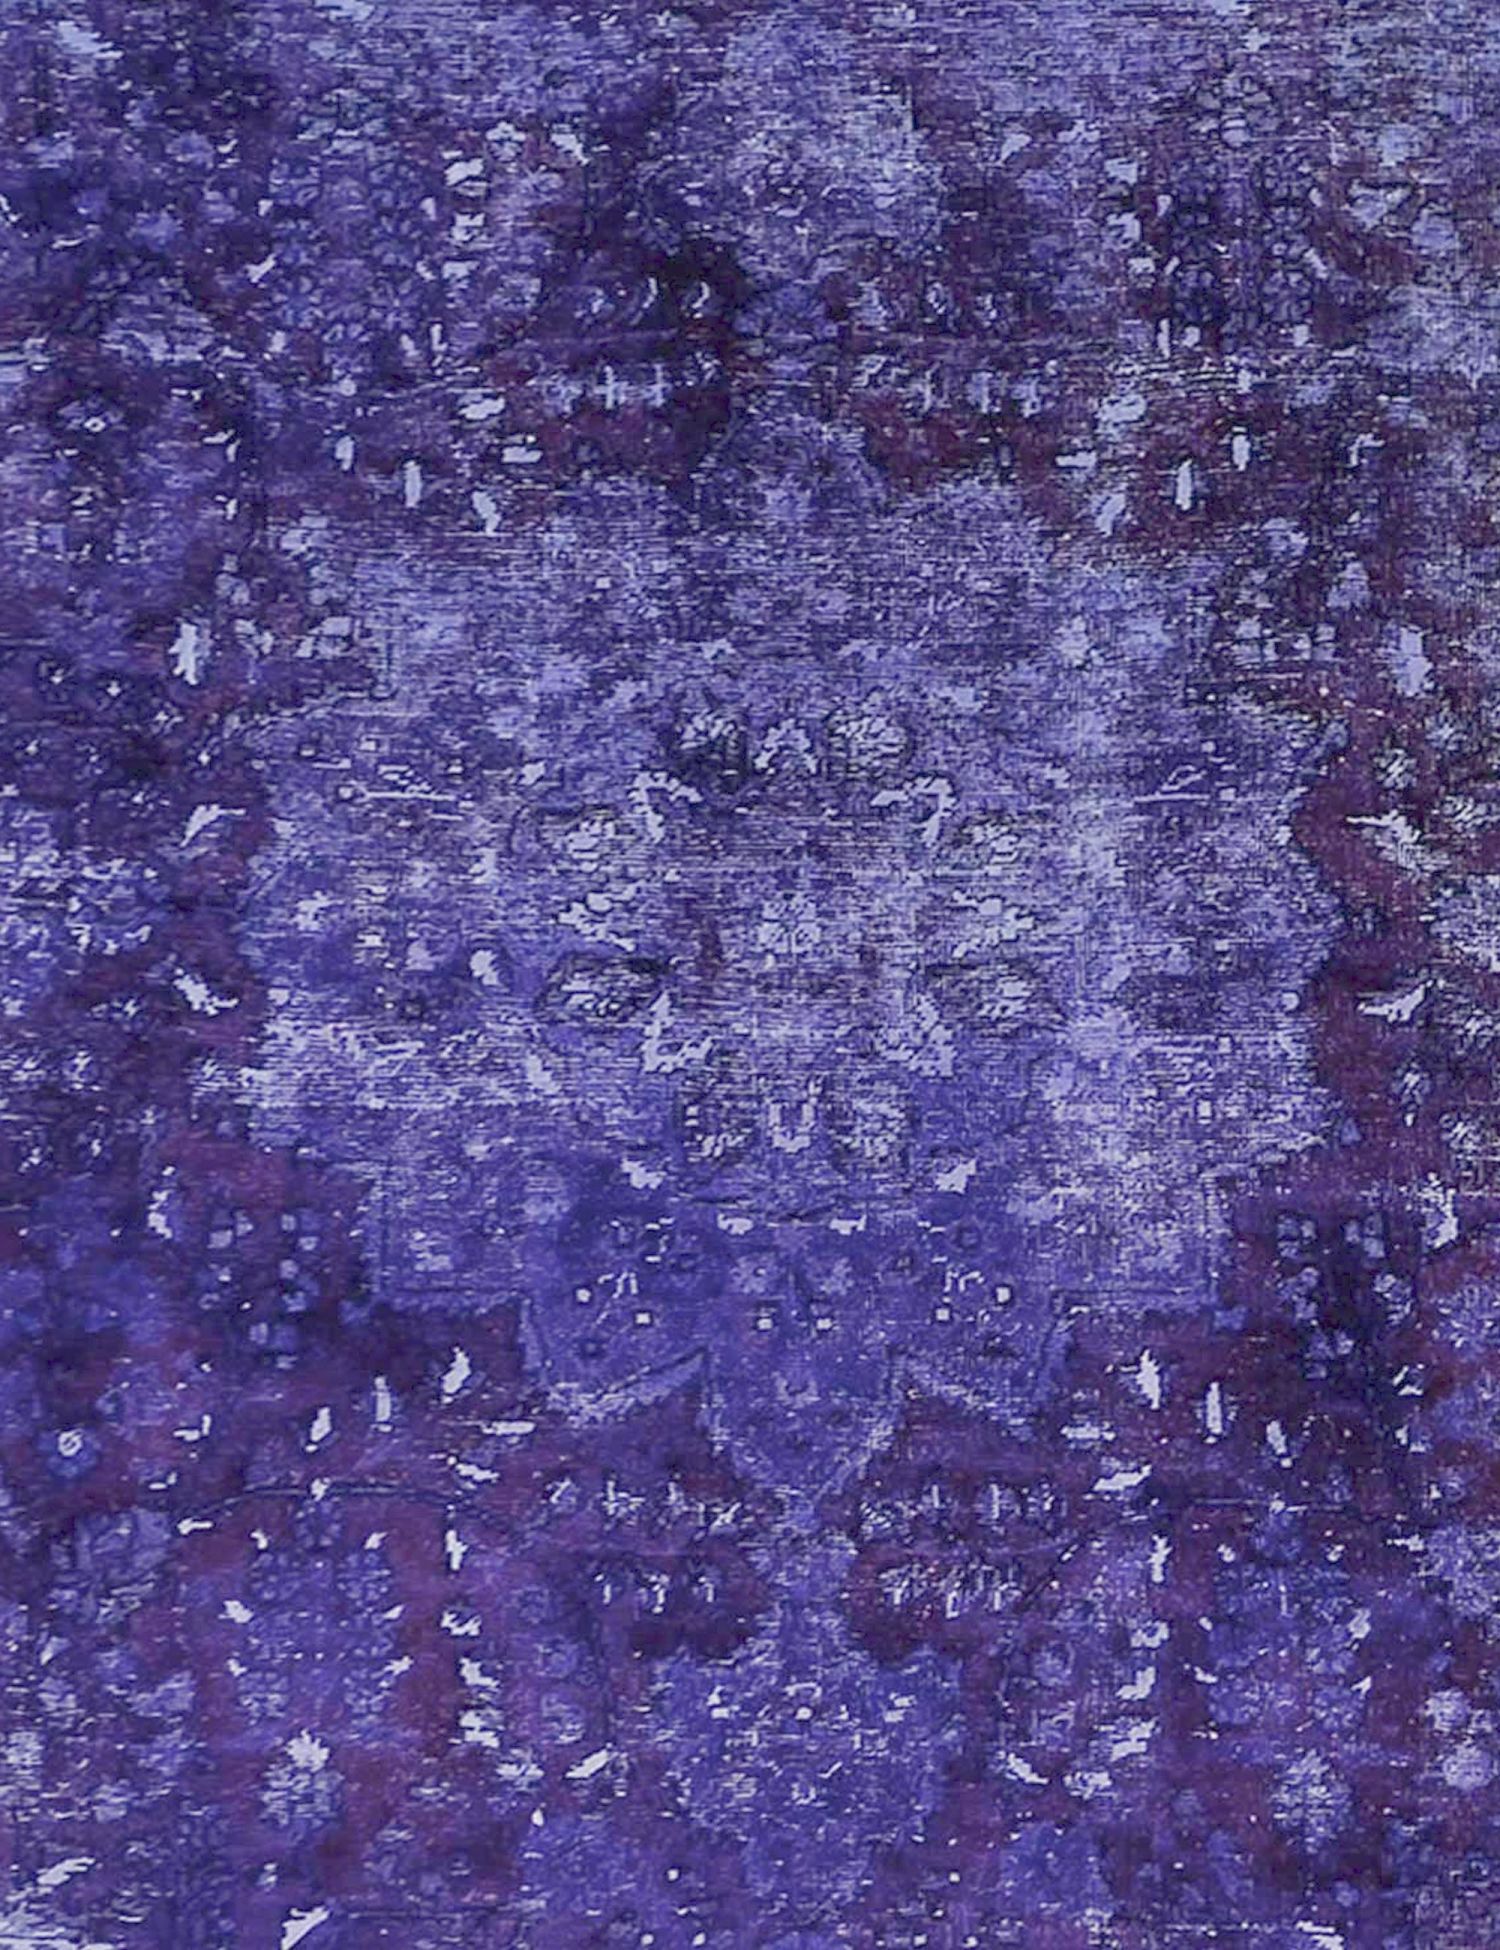 Persian Vintage Carpet  viola <br/>328 x 216 cm